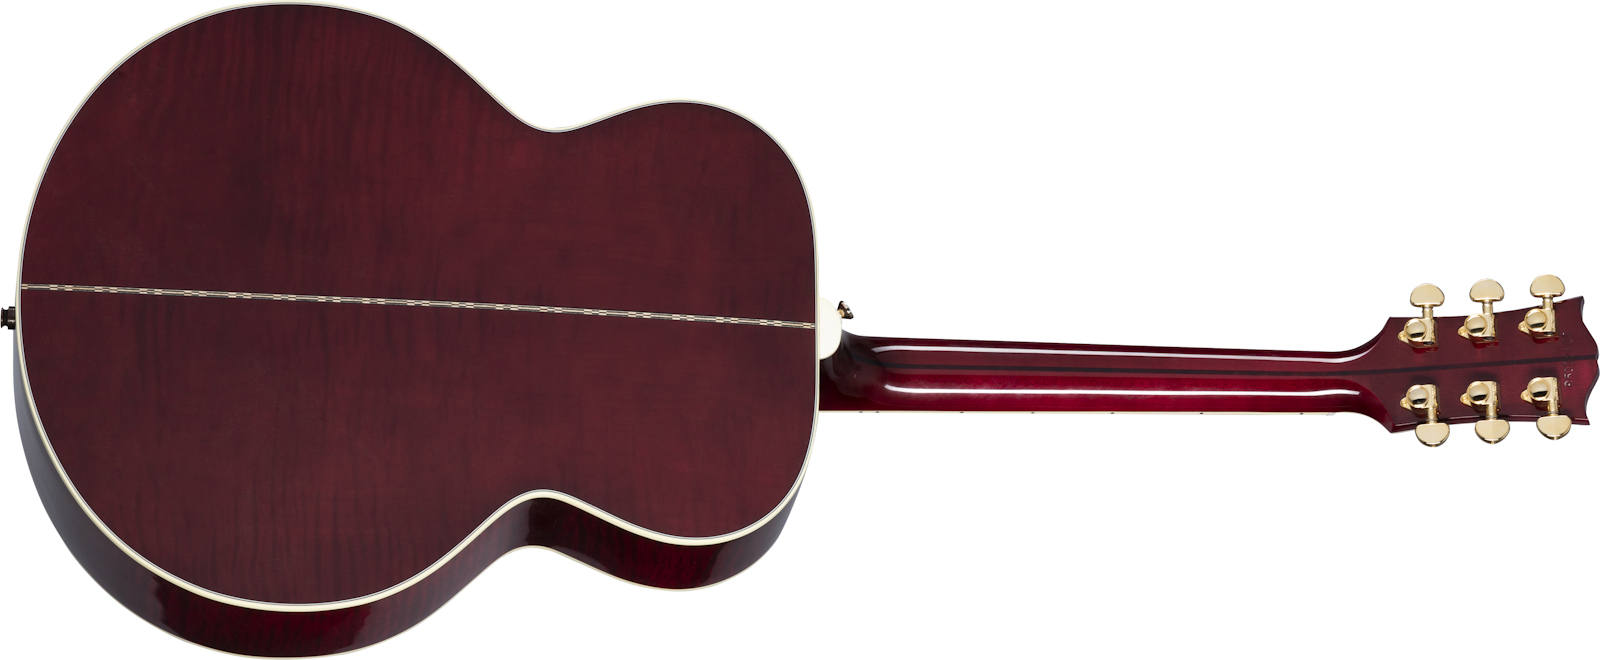 Gibson Sj-200 Standard Modern 2021 Super Jumbo Epicea Erable Rw - Wine Red - Elektroakustische Gitarre - Variation 1